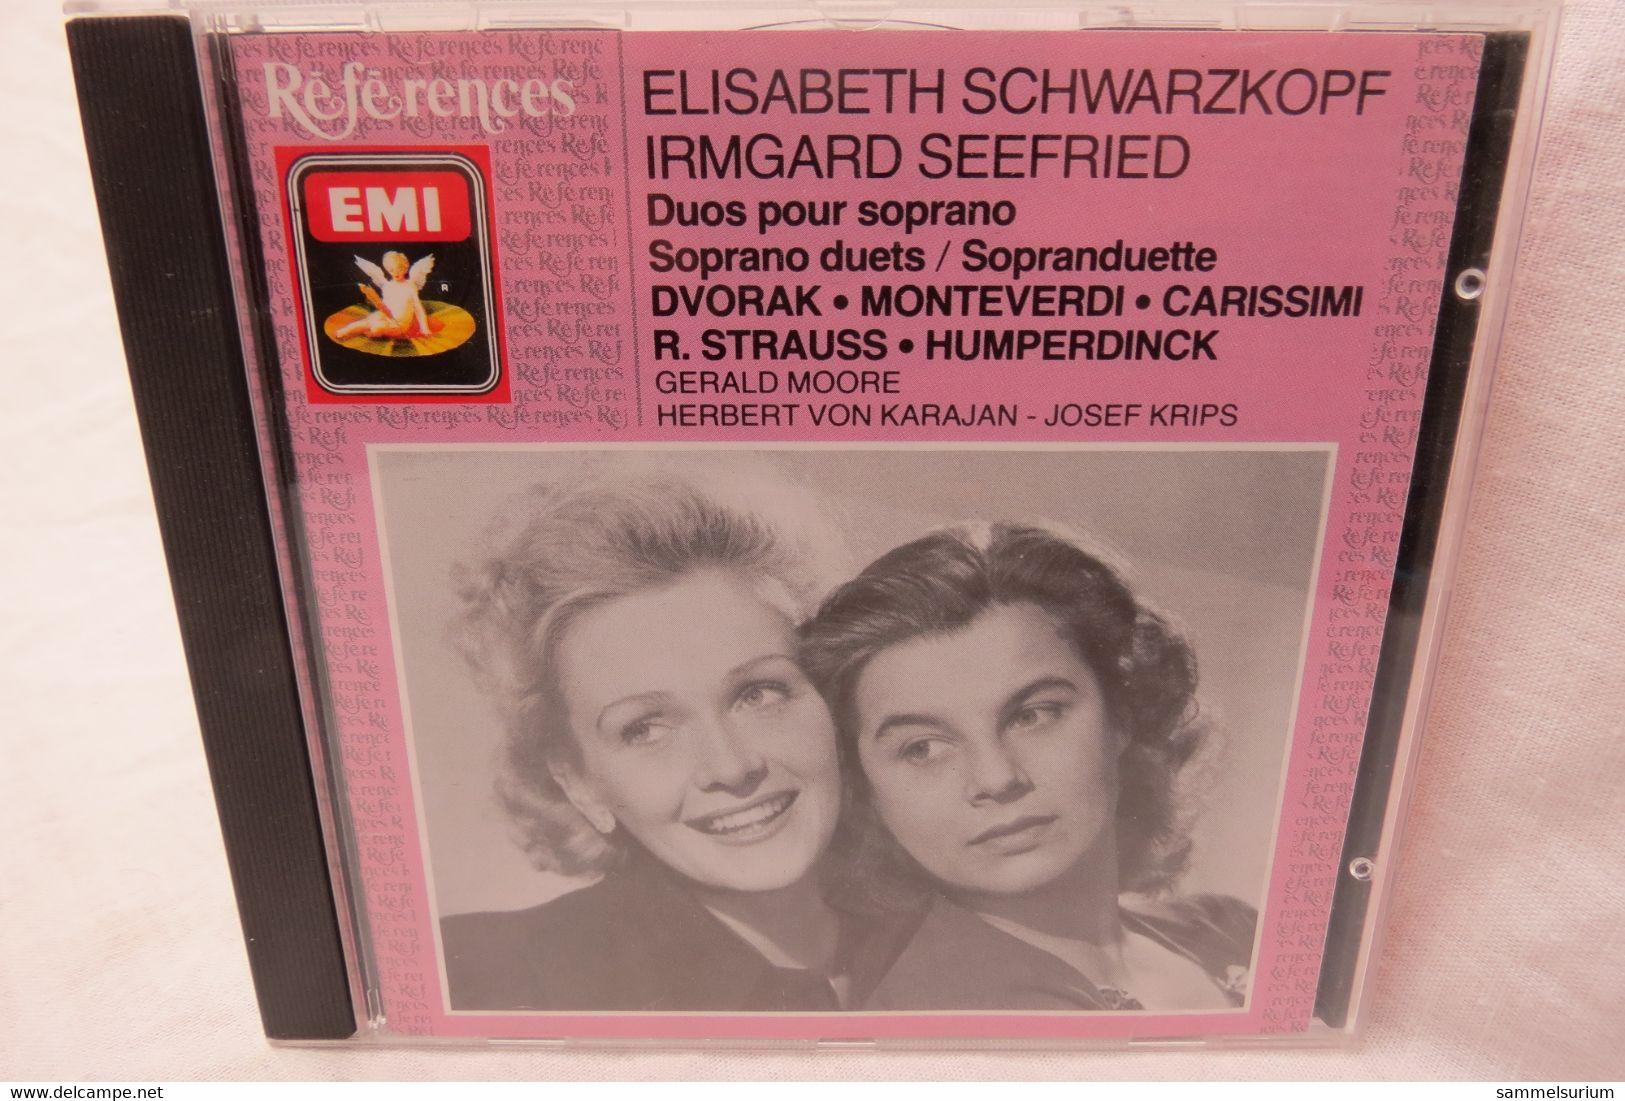 CD "Elisabeth Schwarzkopf / Irmgard Seefried" Soprano Duets / Sopranduette - Opere